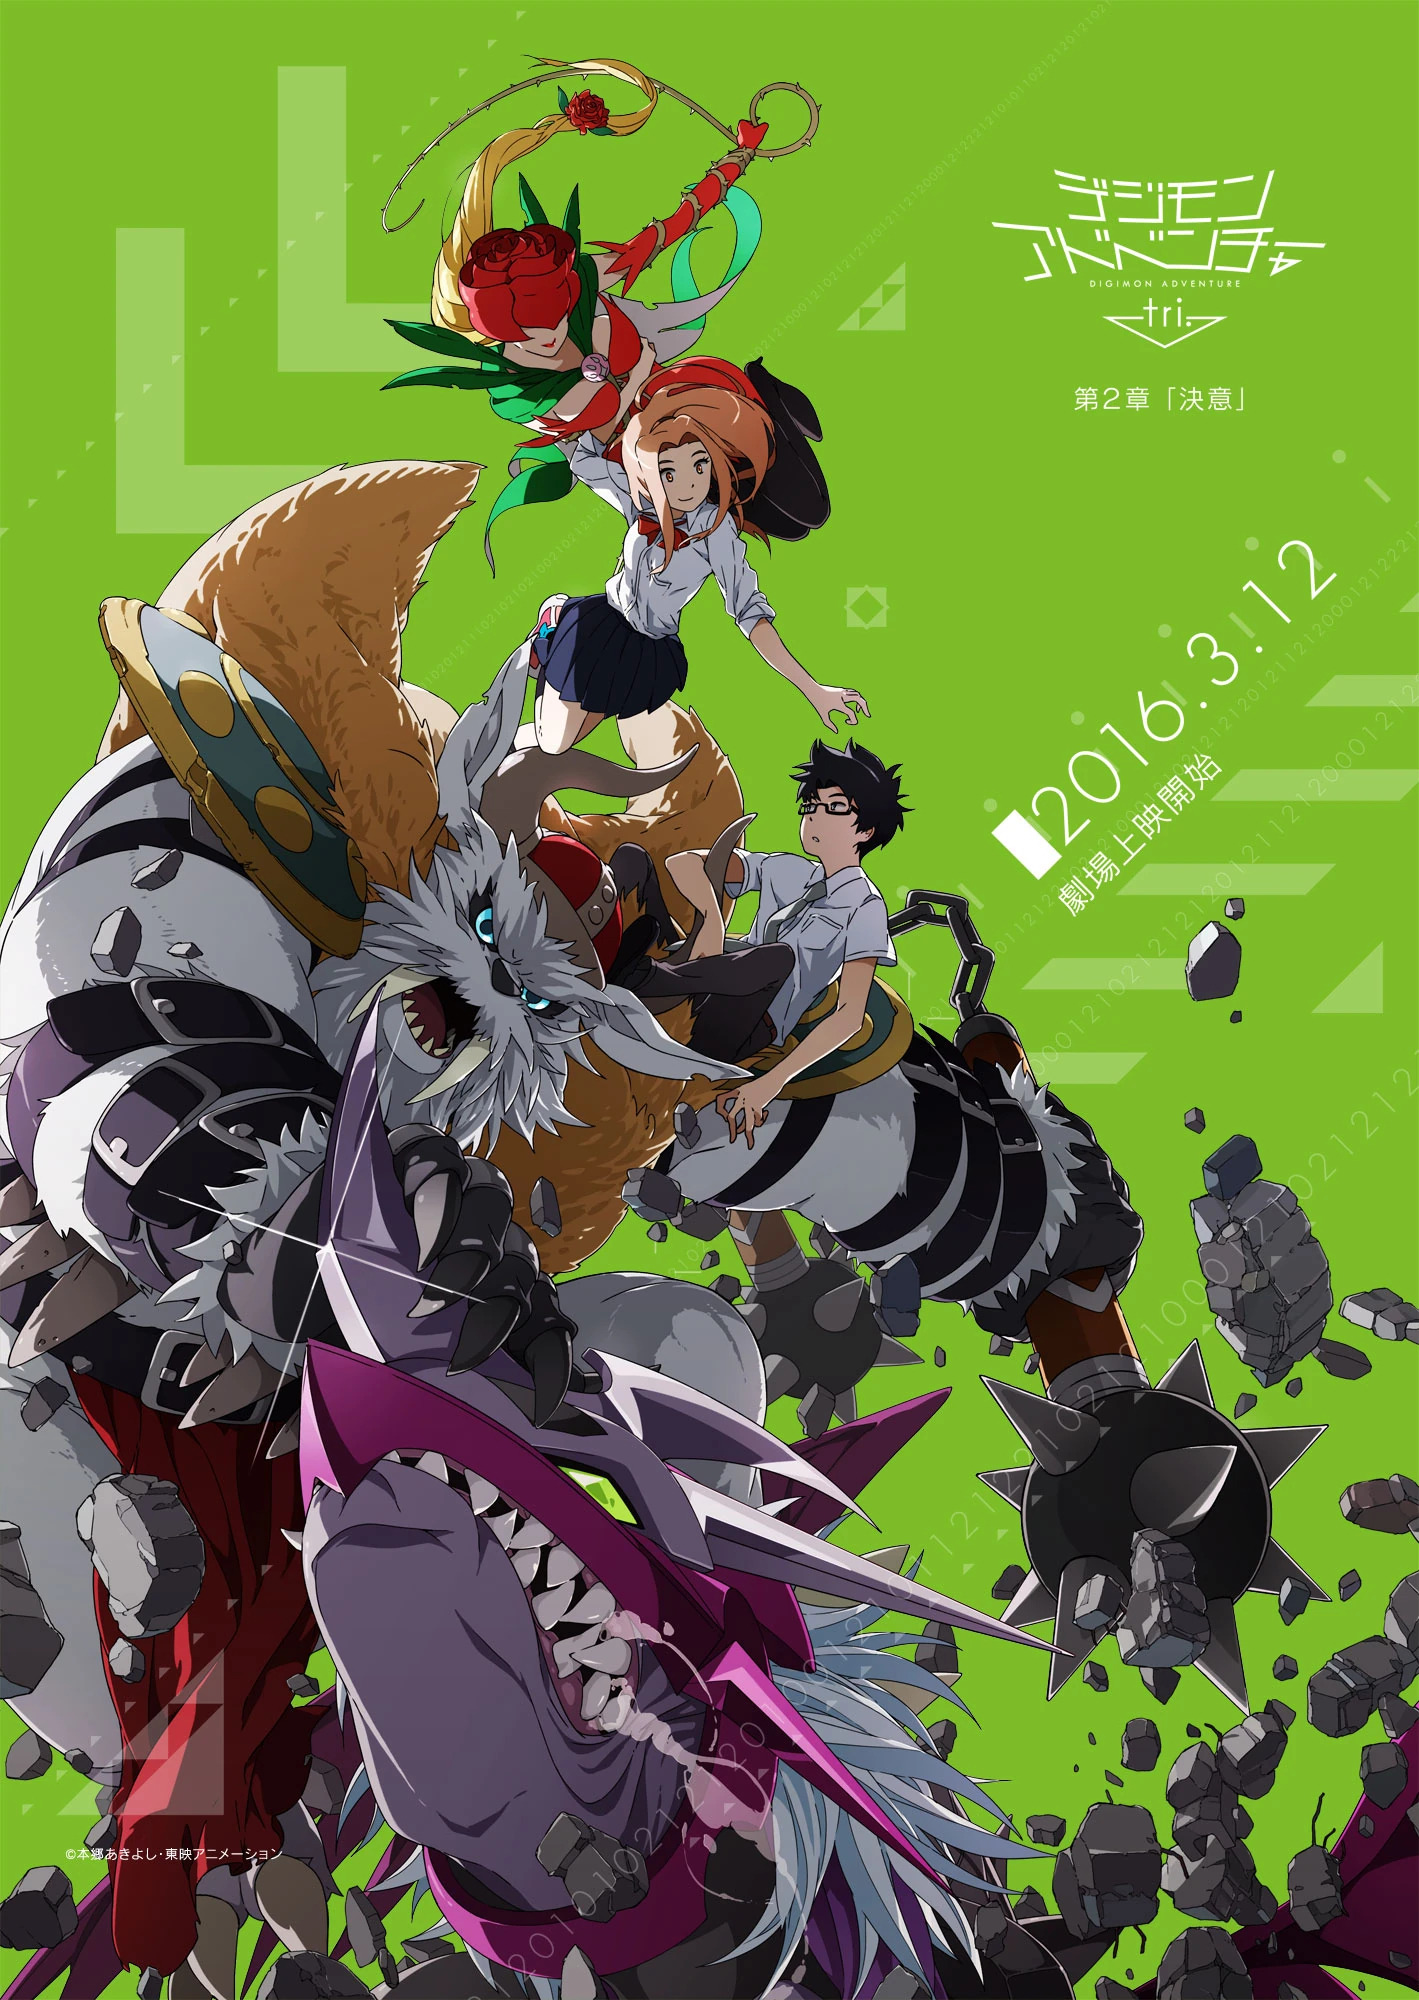 Mega Sized Movie Poster Image for Digimon Adventure tri. 2: Ketsui 